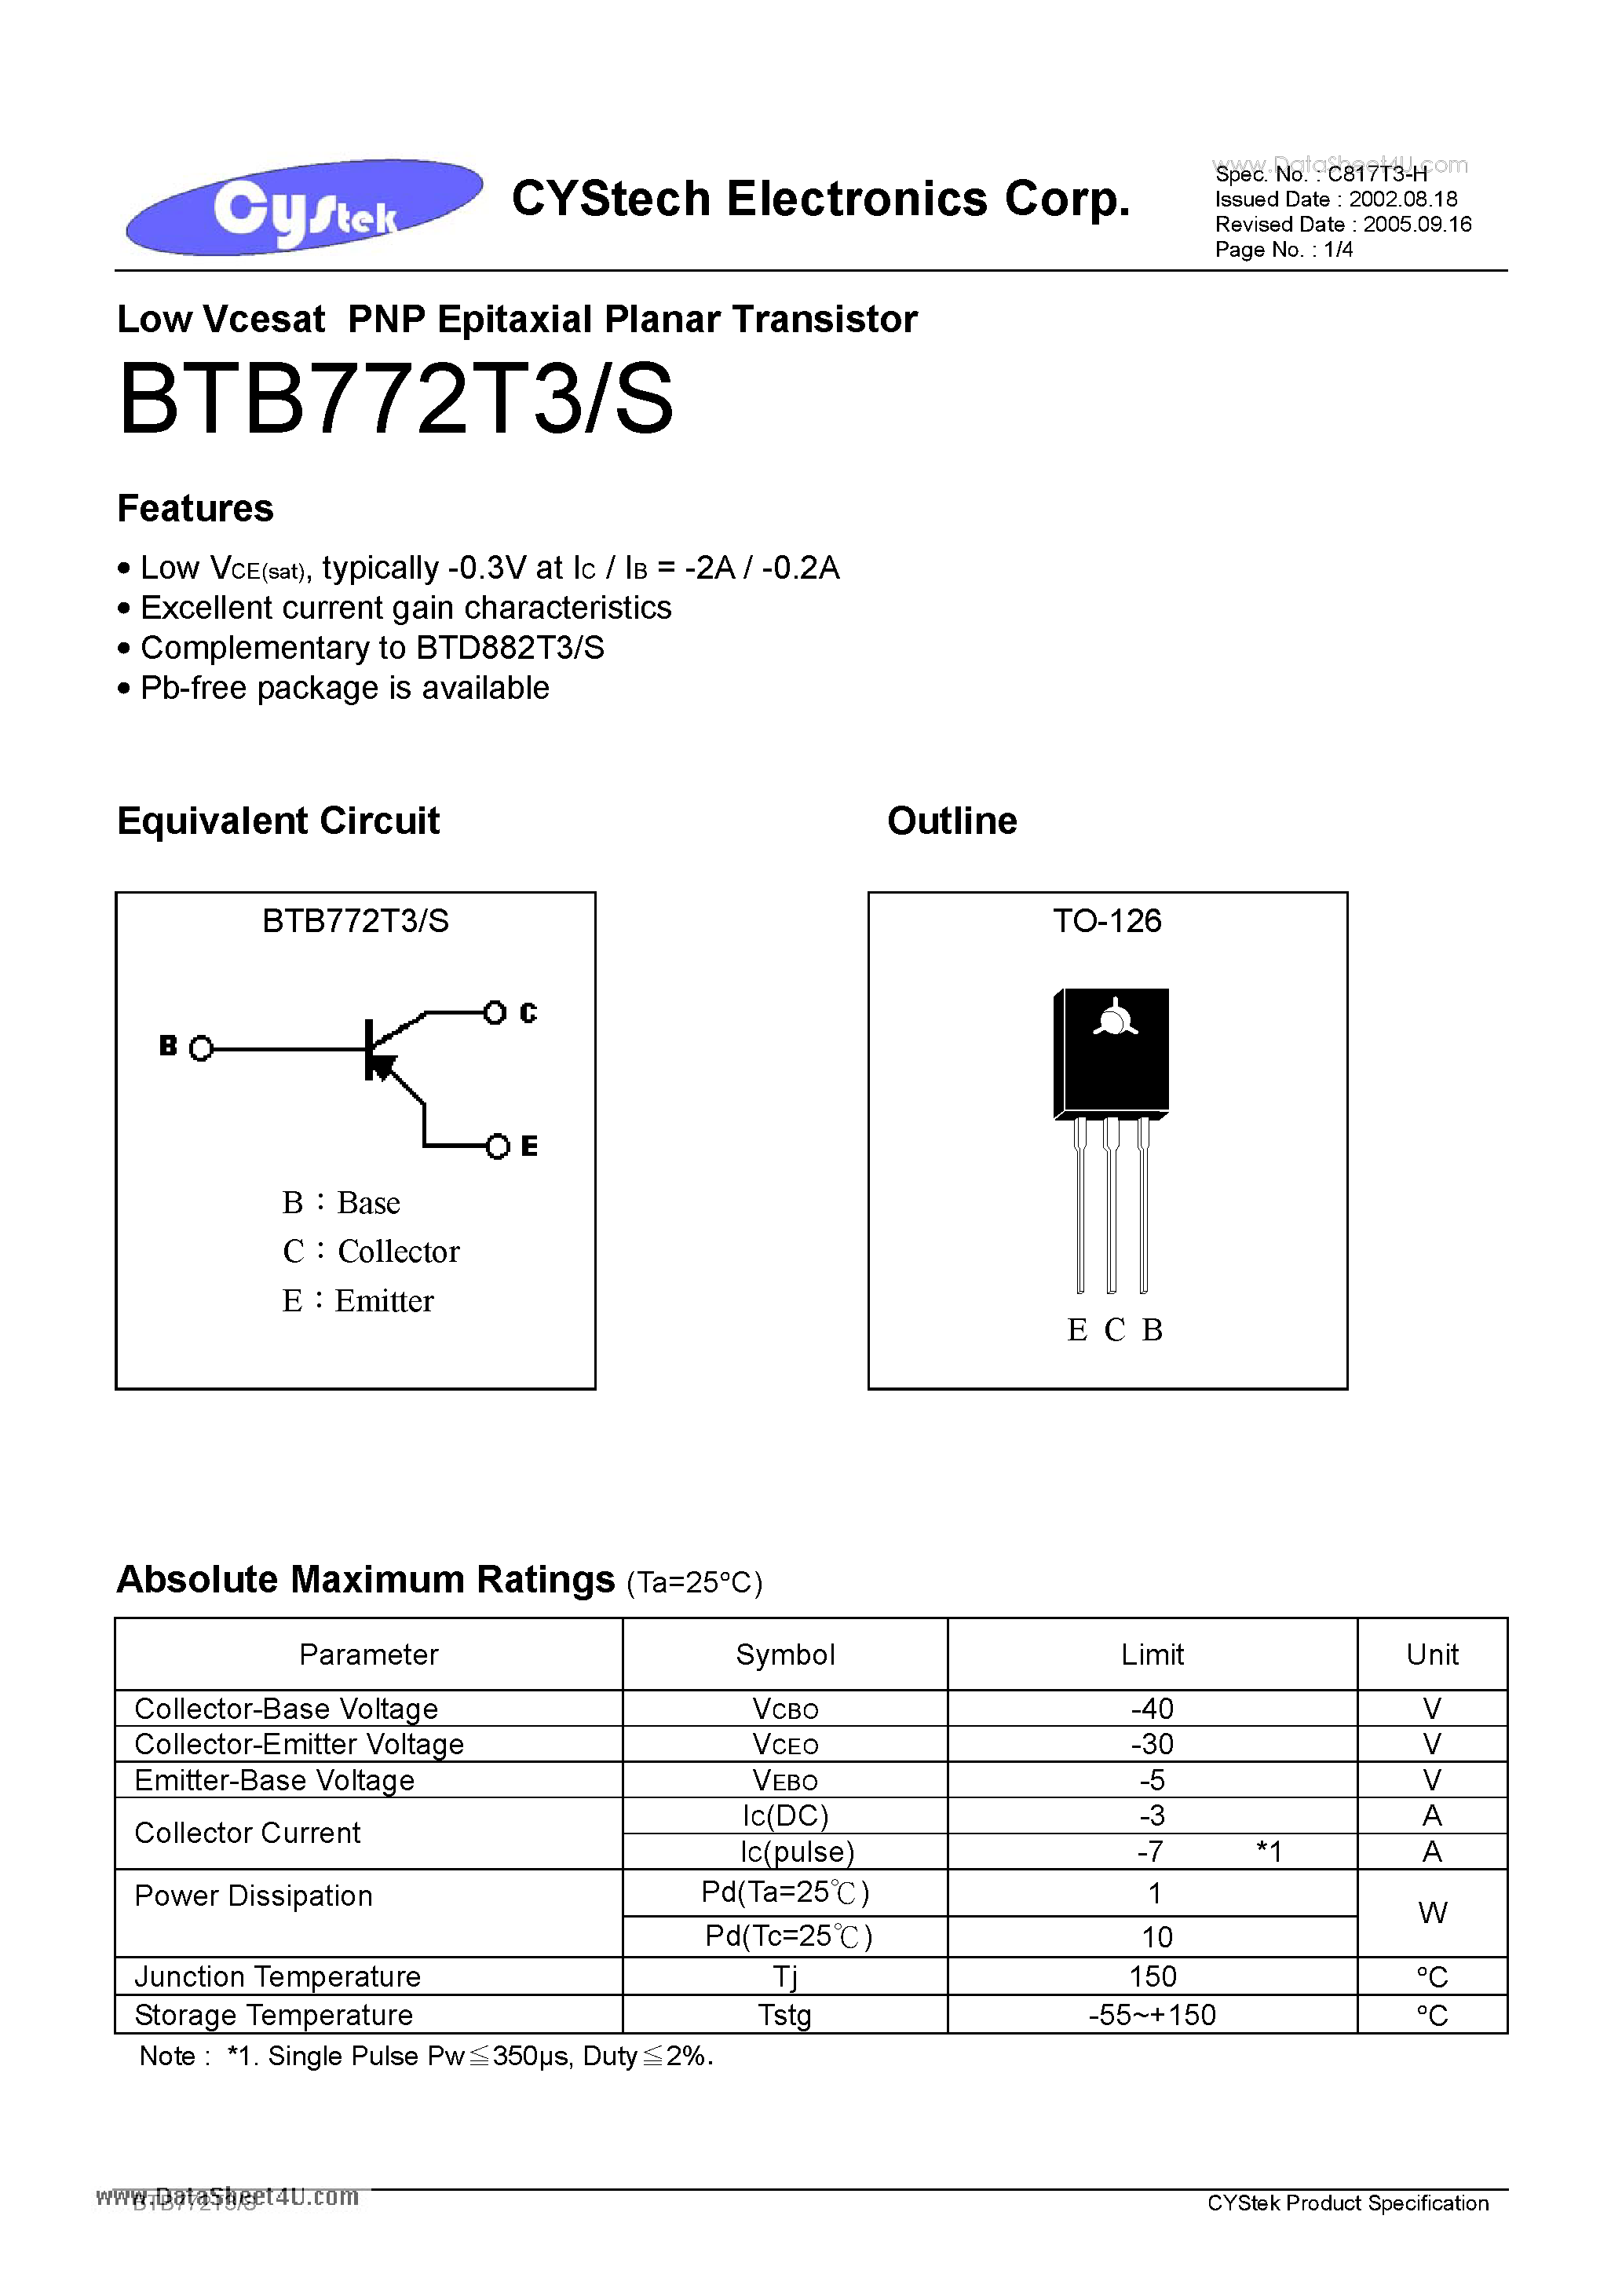 Datasheet BTB772T3 - Low Vcesat PNP Epitaxial Planar Transistor page 1